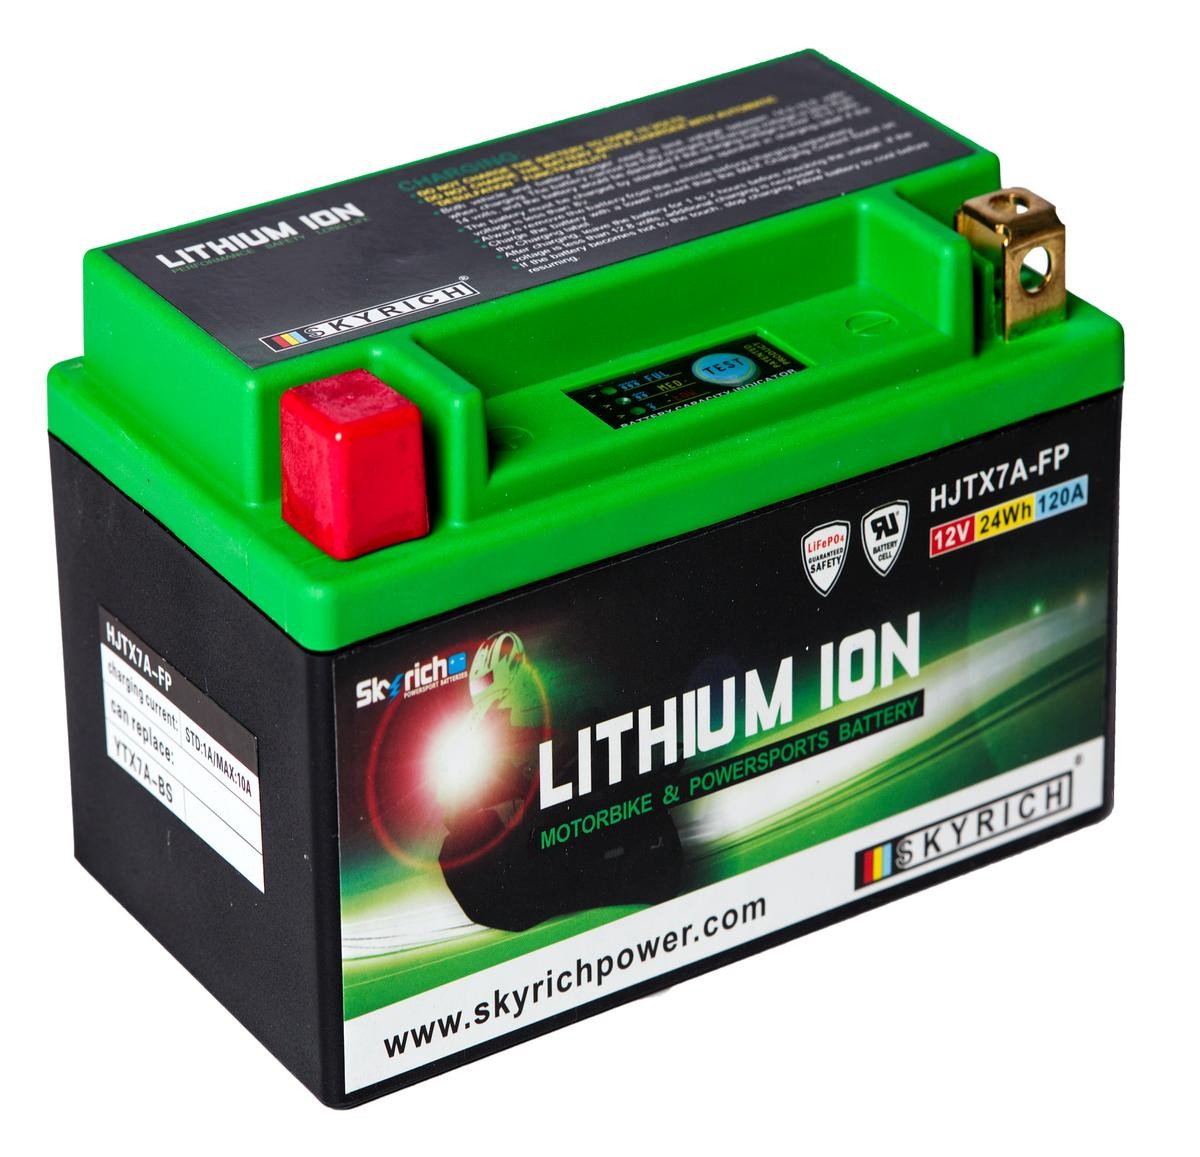 SKYRICH LITHIUM ION 12V 2Ah 120A N Li-Ion Battery Cold-test Current, EN: 120A, Voltage: 12V, Terminal Placement: 1 Starter battery HJTX7A-FP buy